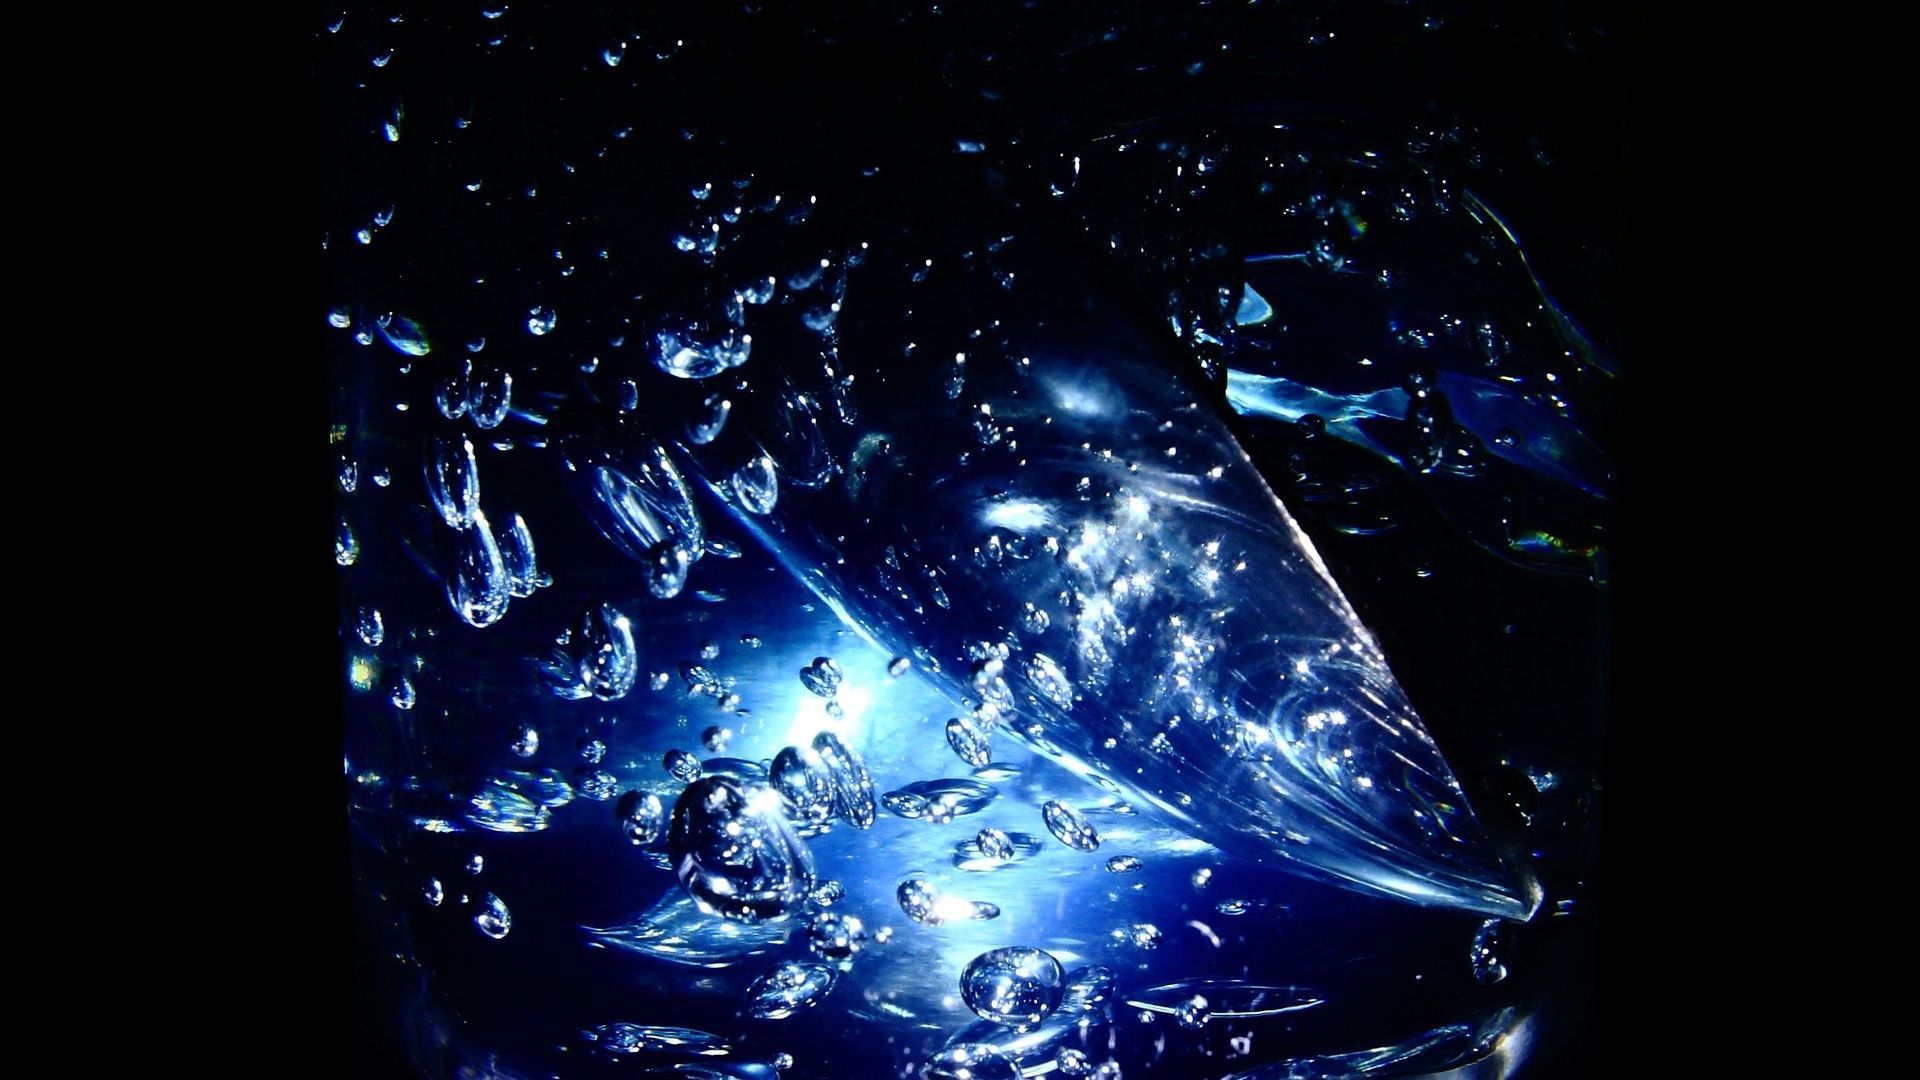 Abstract Blue Black Water Drops Wallpaper